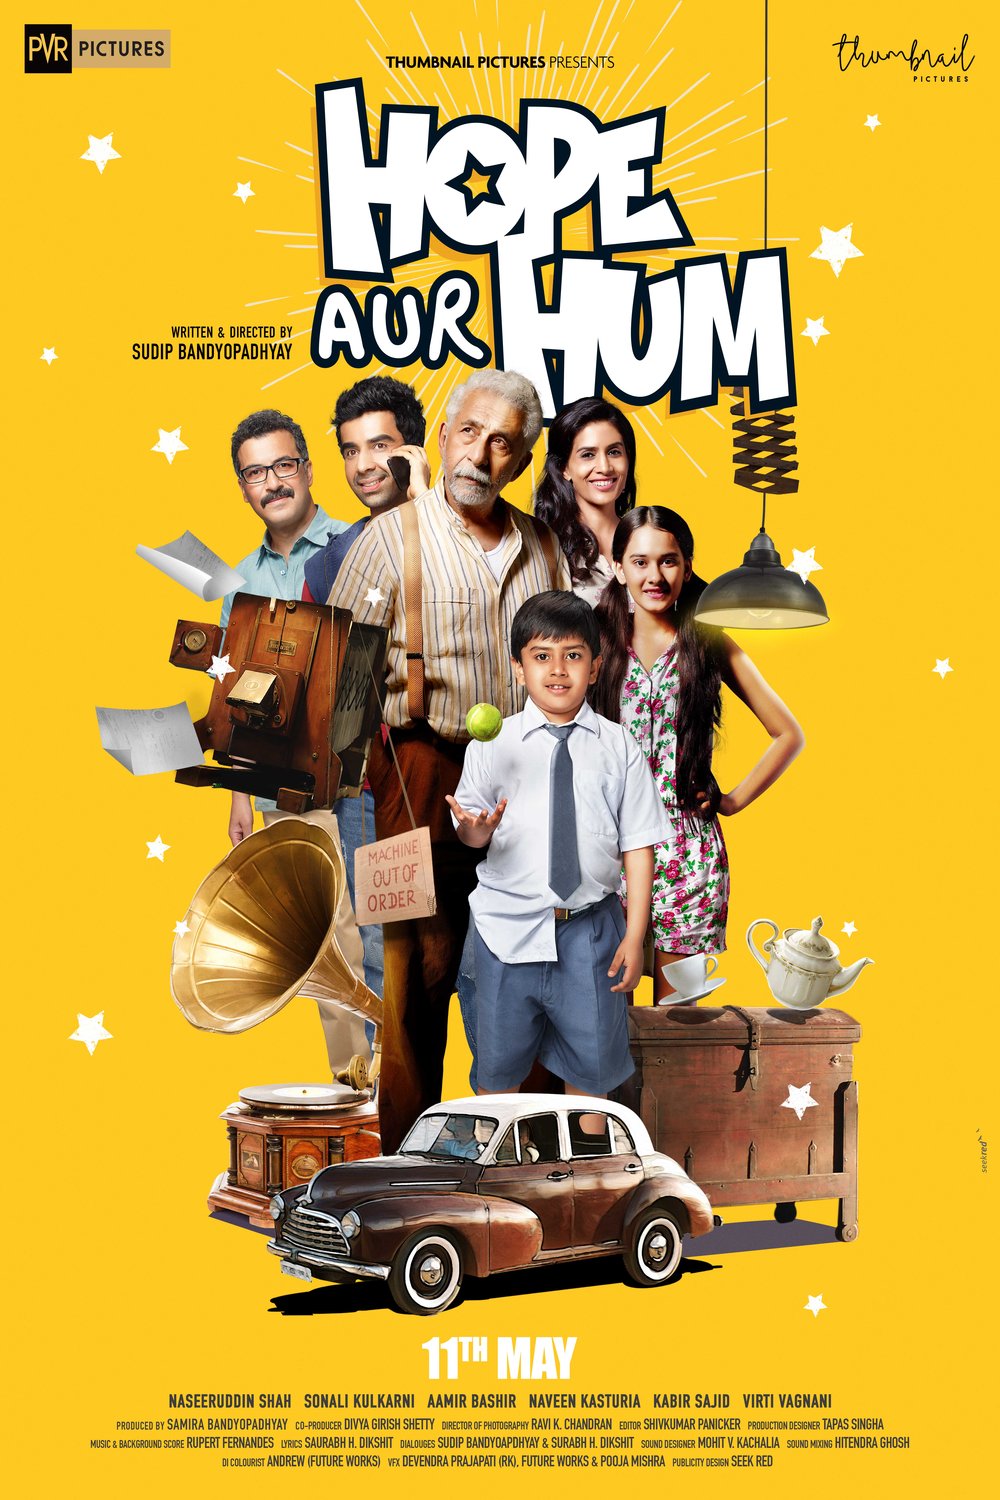 Hindi poster of the movie Hope Aur Hum